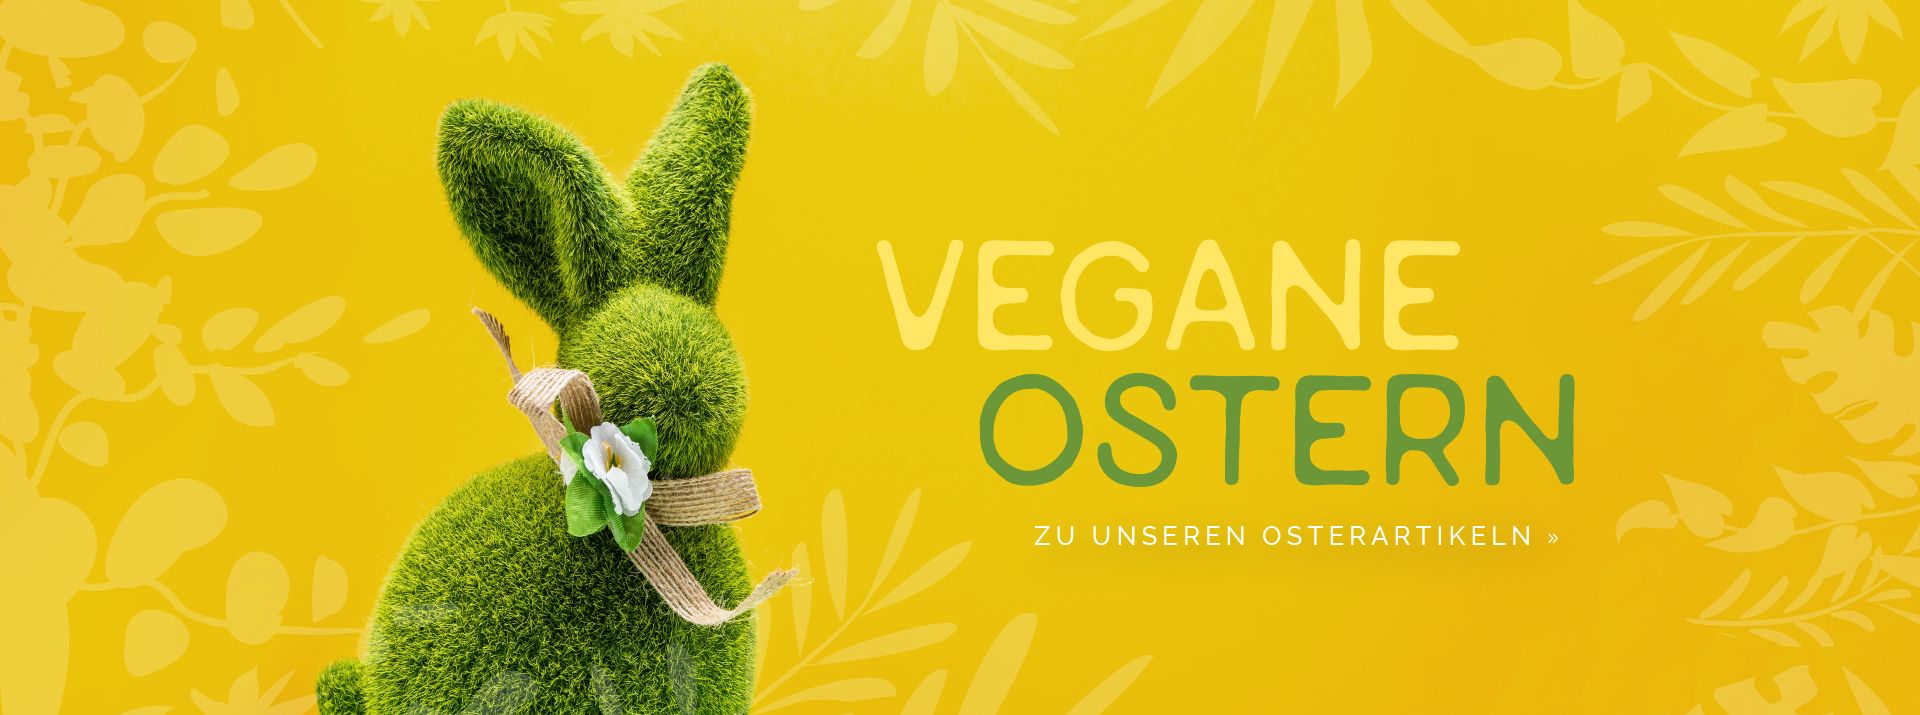 Vegane Ostern bei kokku-online.de